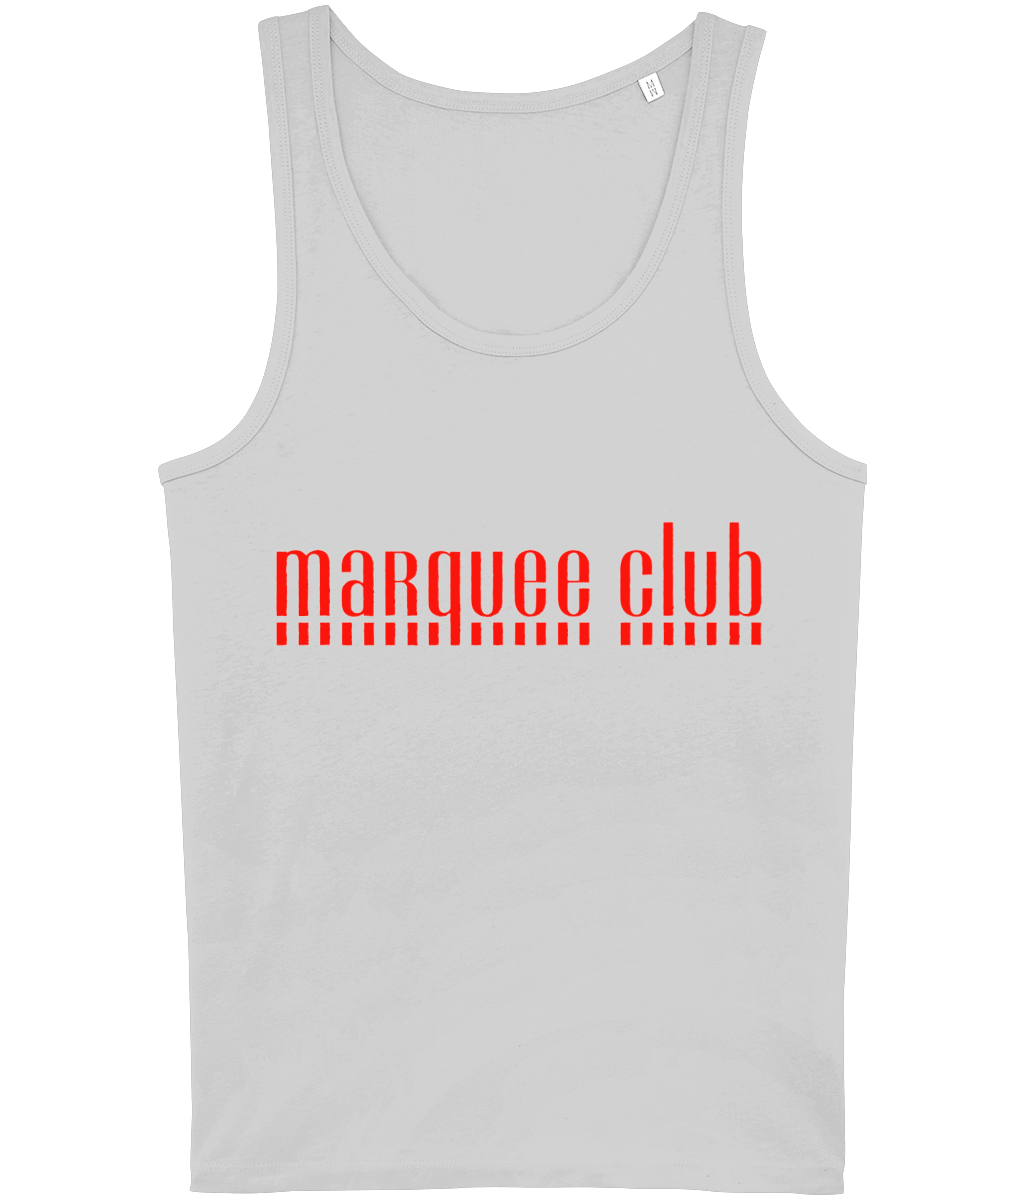 Marquee Club Men's Vest